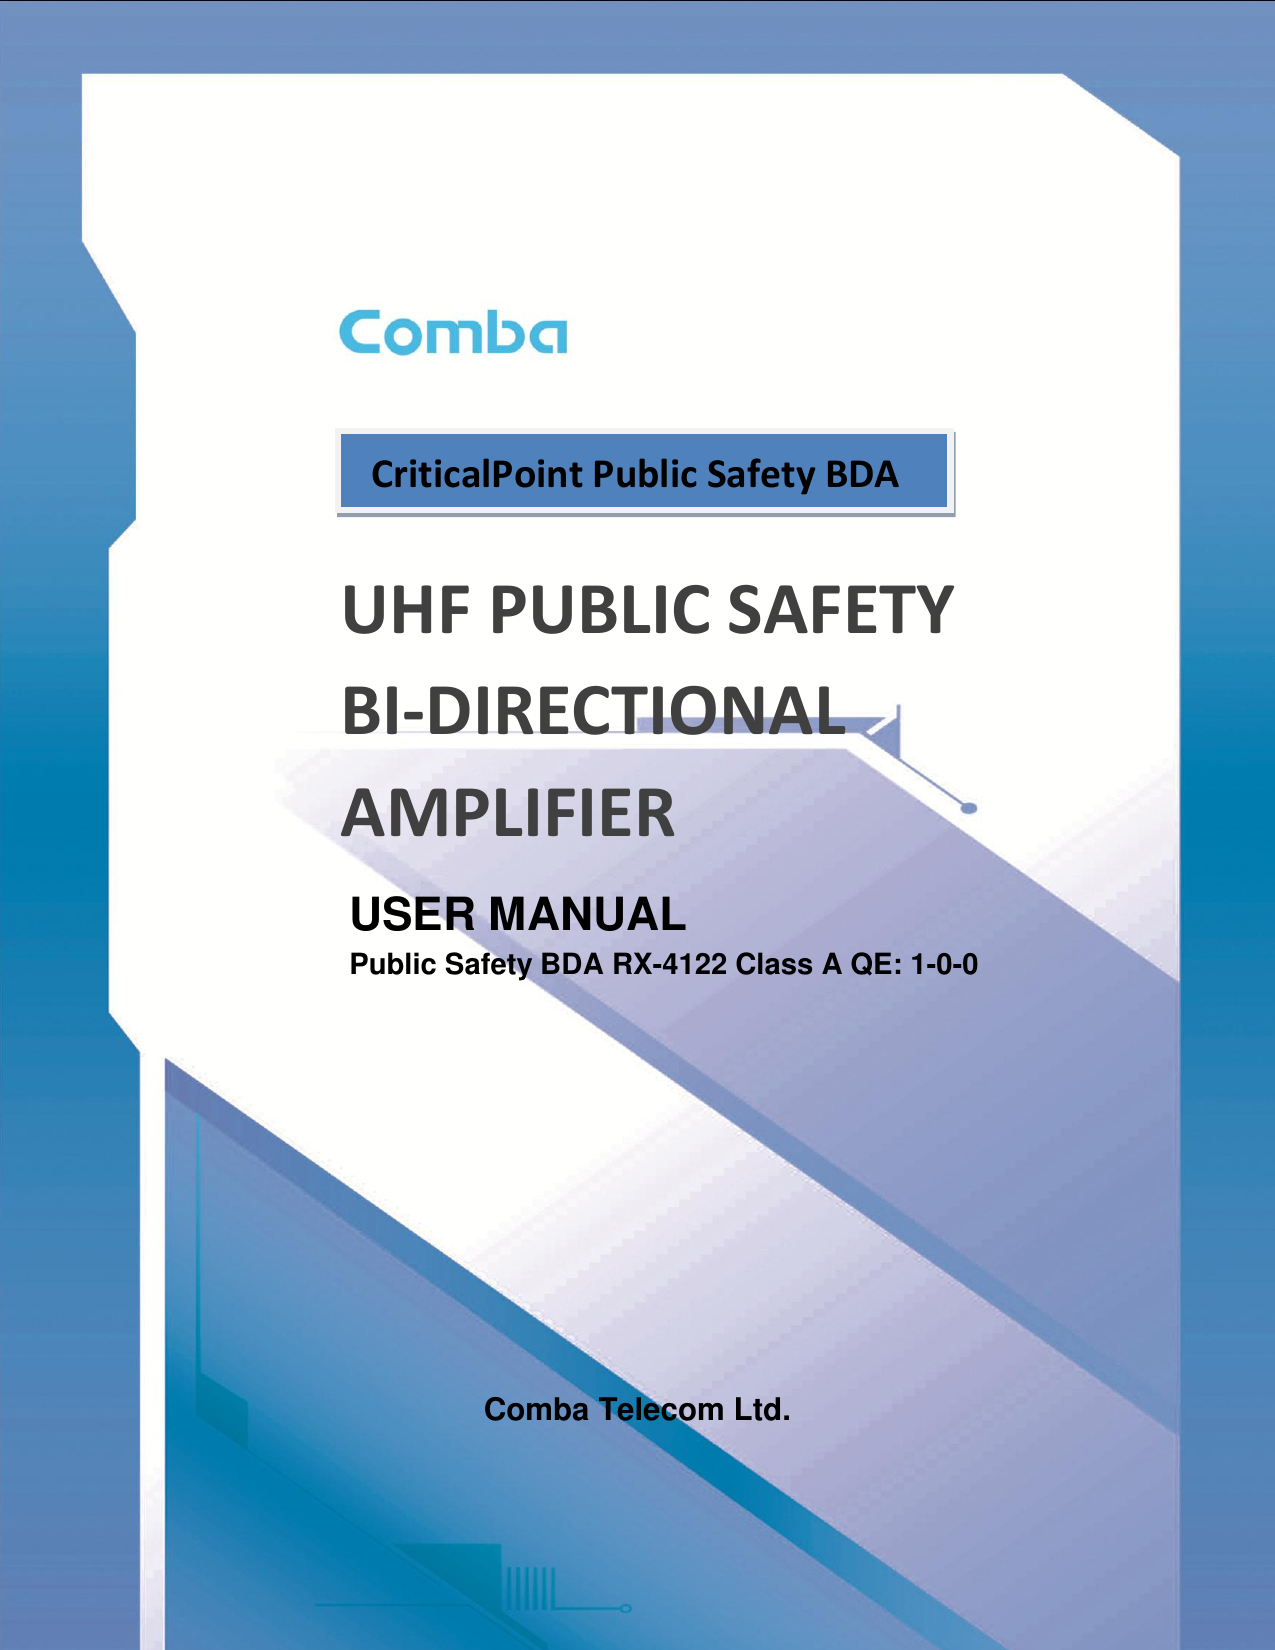               UHF PUBLIC SAFETY BI-DIRECTIONAL AMPLIFIER USER MANUAL Public Safety BDA RX-4122 Class A QE: 1-0-0          Comba Telecom Ltd.  CriticalPoint Public Safety BDA 